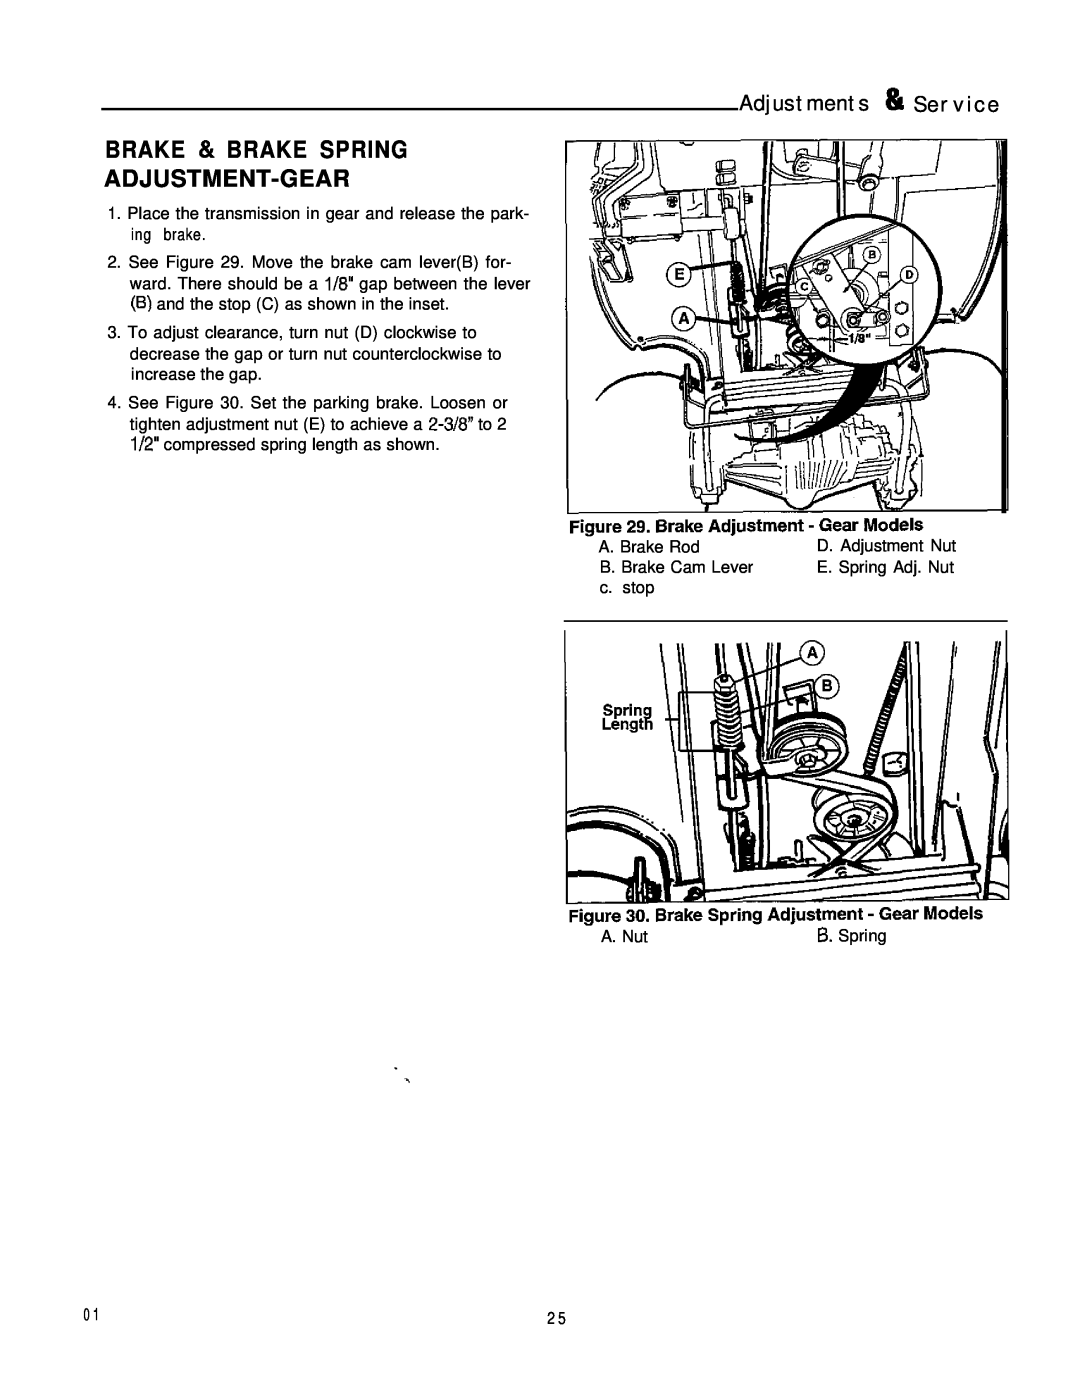 Simplicity 1693264, 1693266 manual Adjustments & S e r v i c e, Brake & Brake Spring Adjustment-Gear 